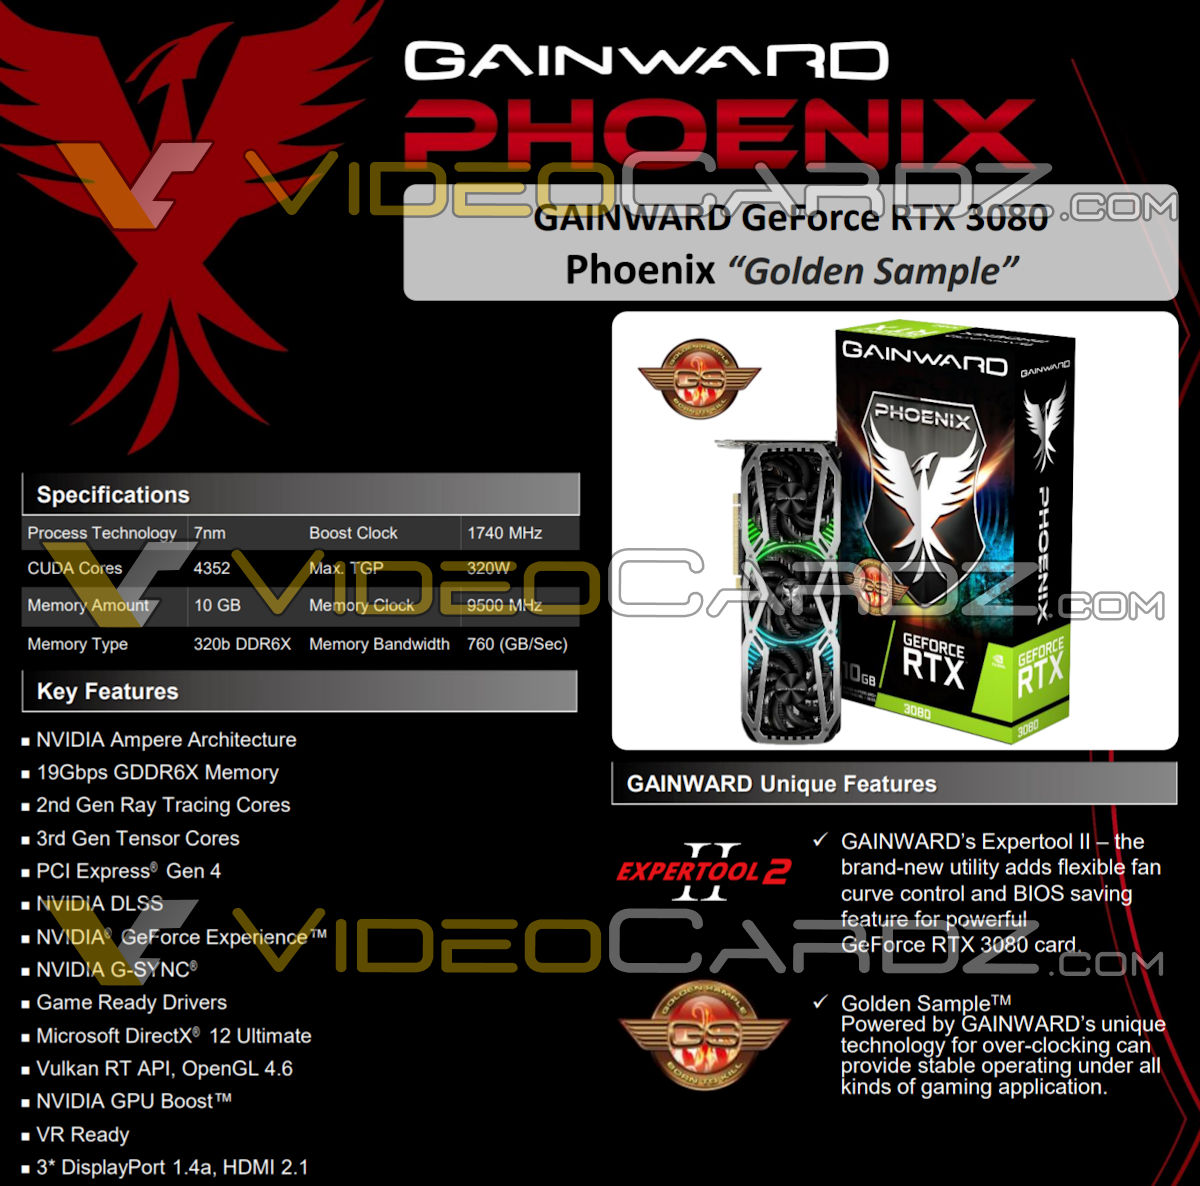 GAINWARD GeForce RTX 3090 and RTX 3080 Phoenix leaked, specs